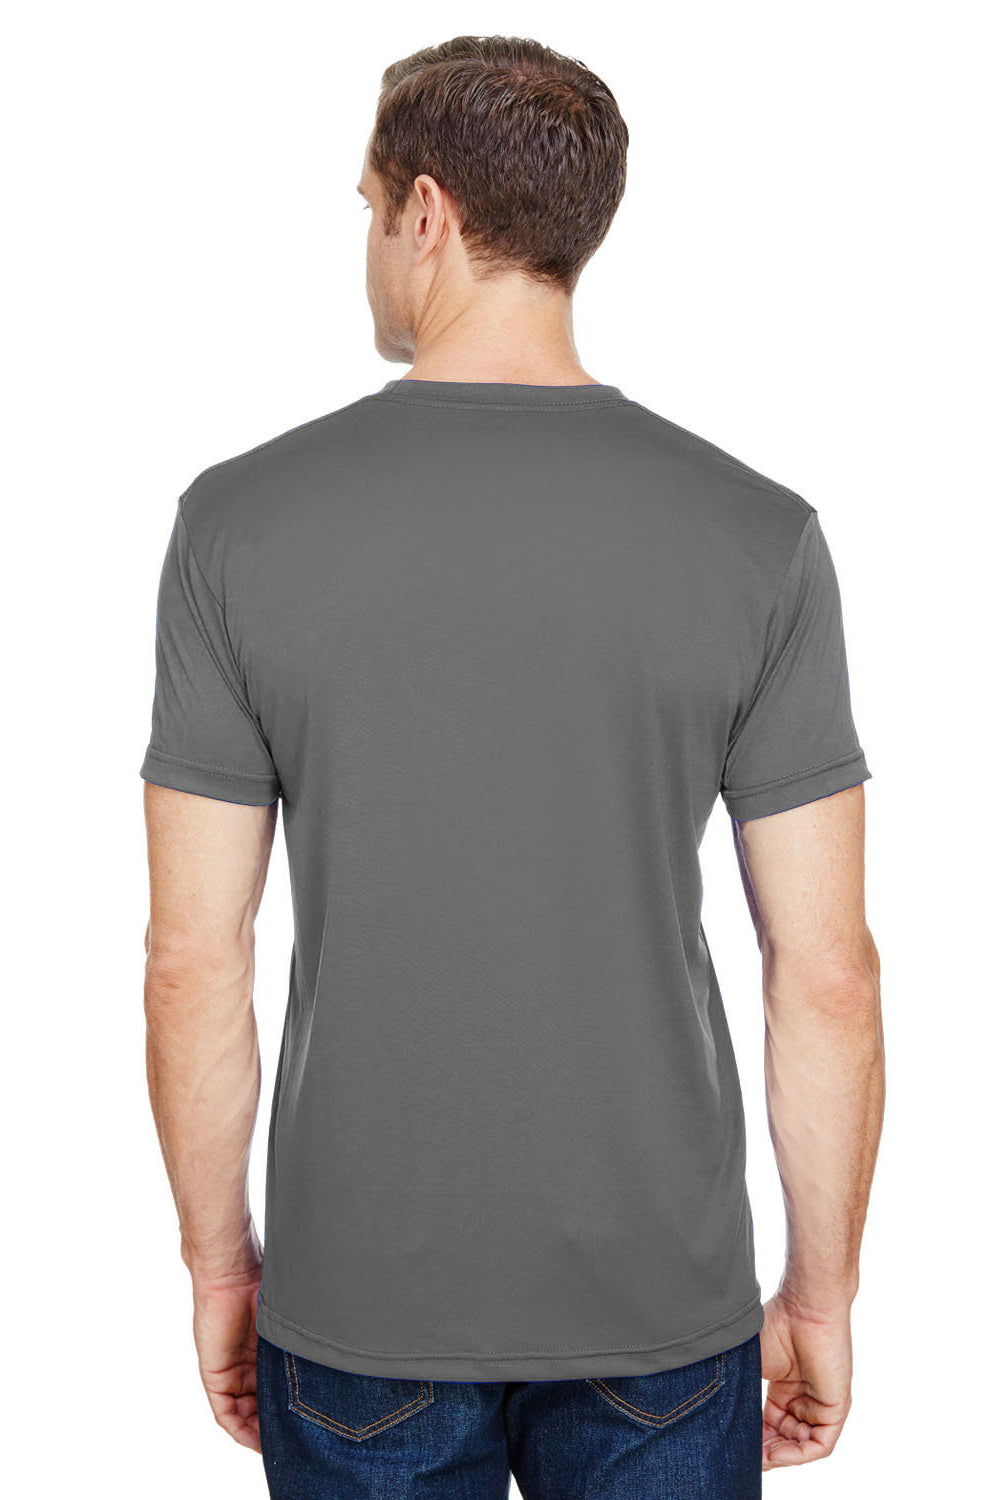 Bayside 5300 Mens USA Made Performance Short Sleeve Crewneck T-Shirt Charcoal Grey Model Back